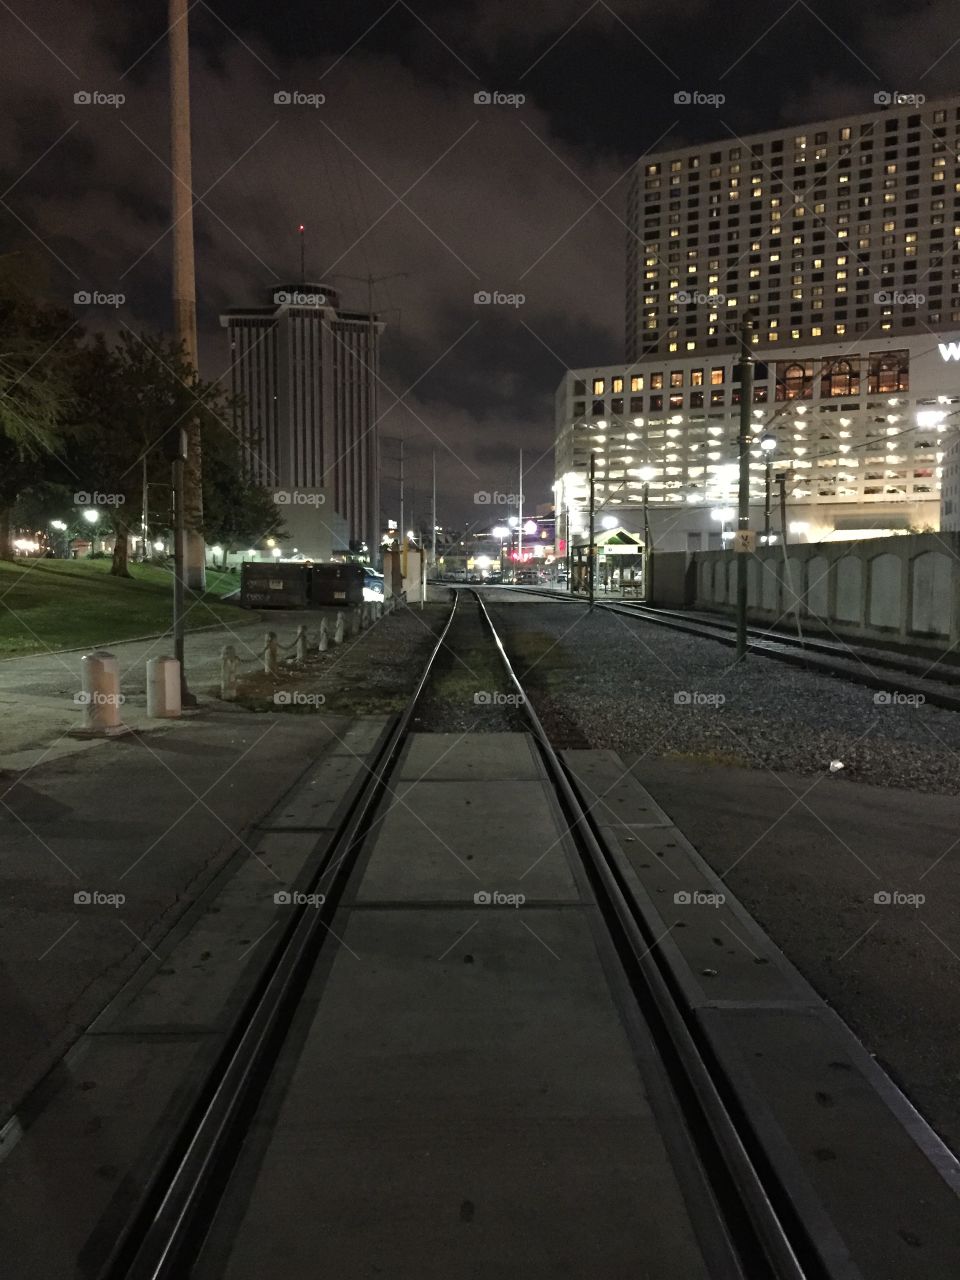 New Orleans rail. Train tracks